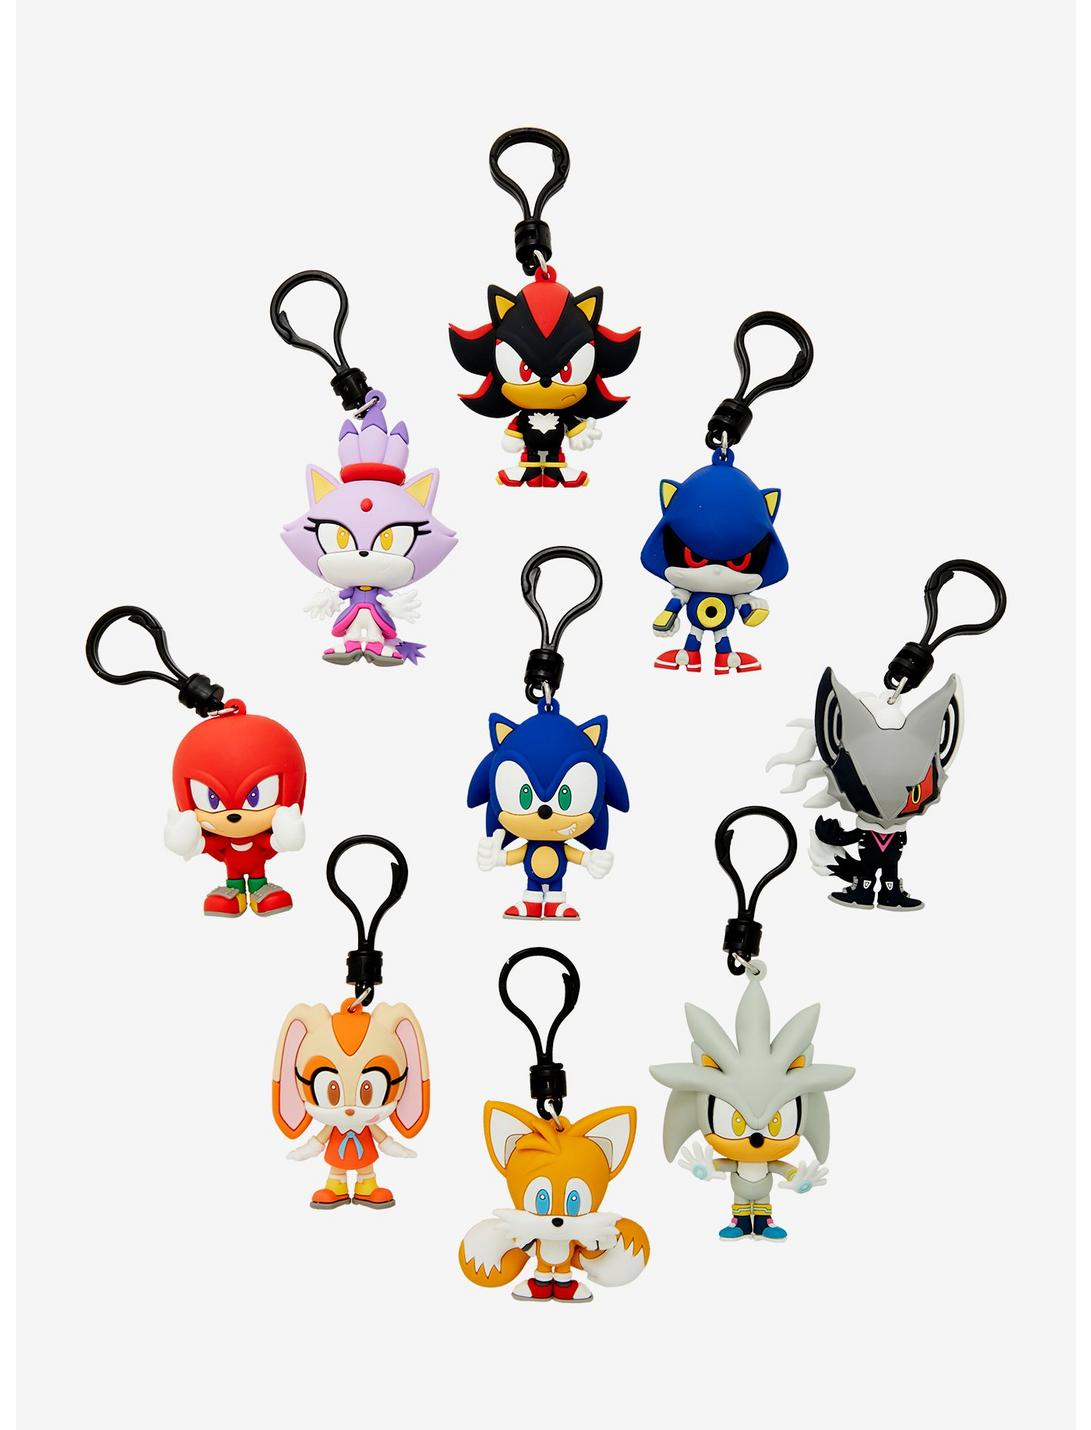 Sonic the Hedgehog Characters Series 2 Blind Bag Figural Bag Clip, , hi-res